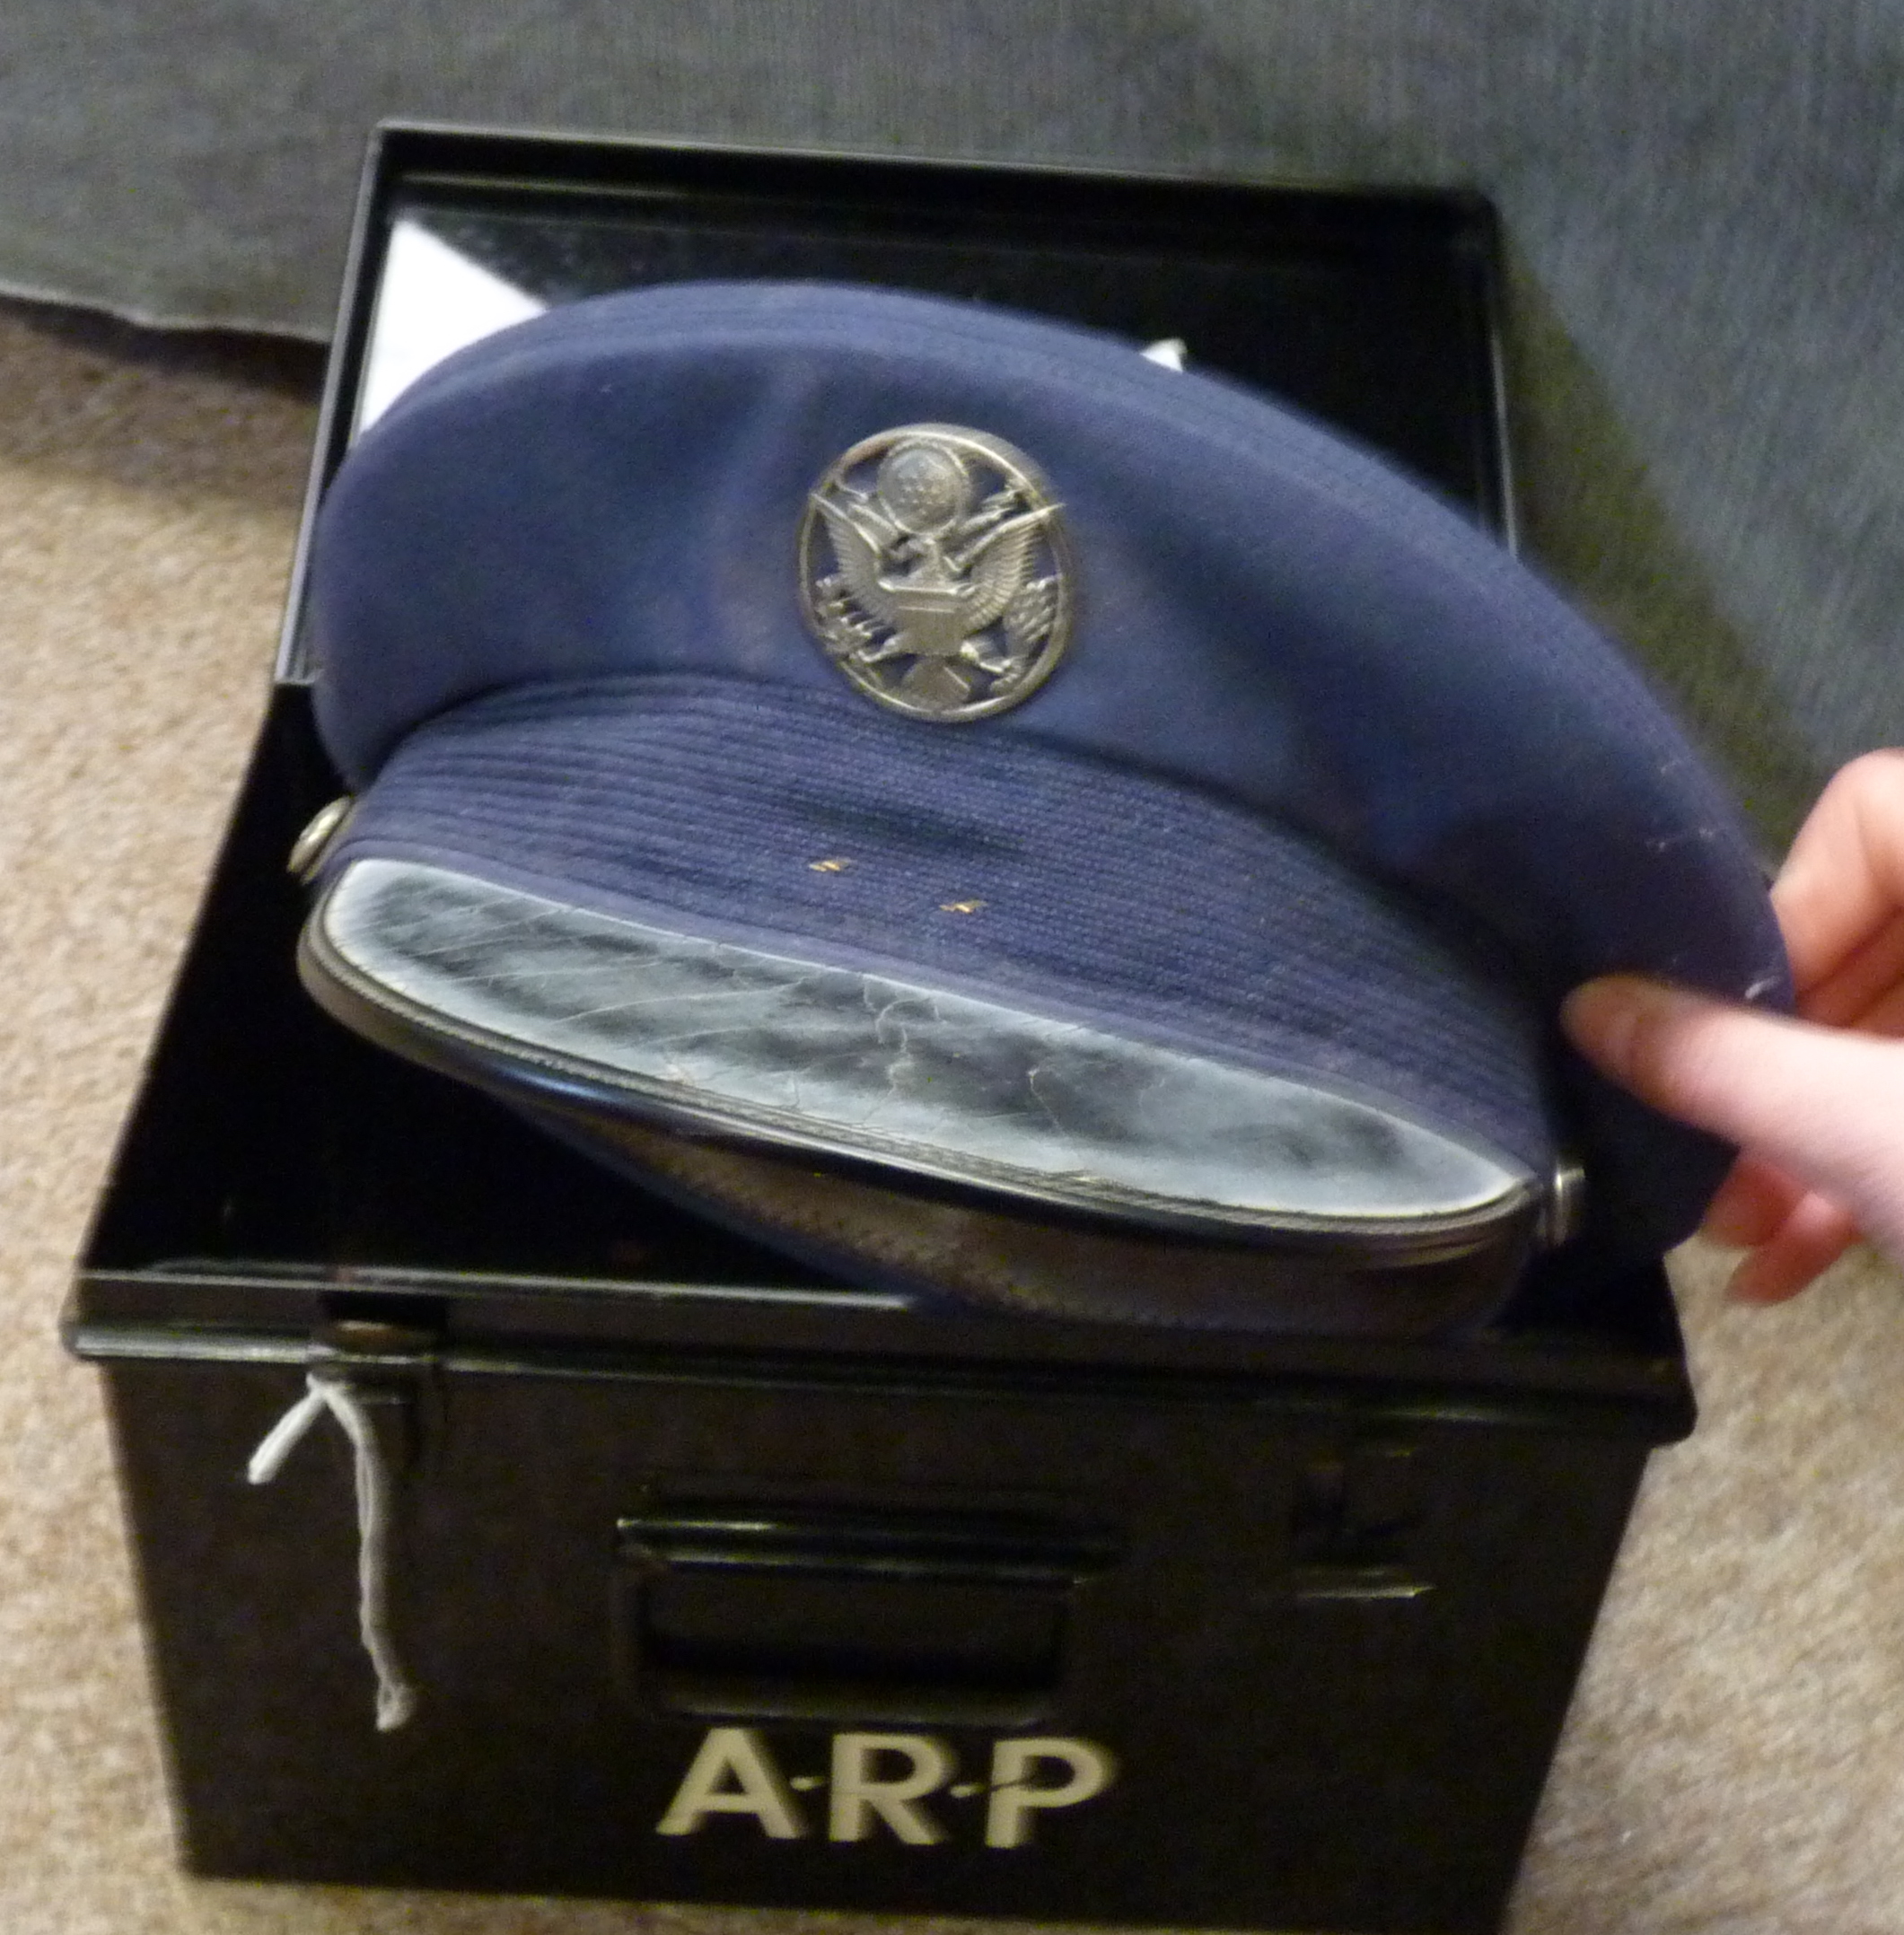 ARP box and USA cap